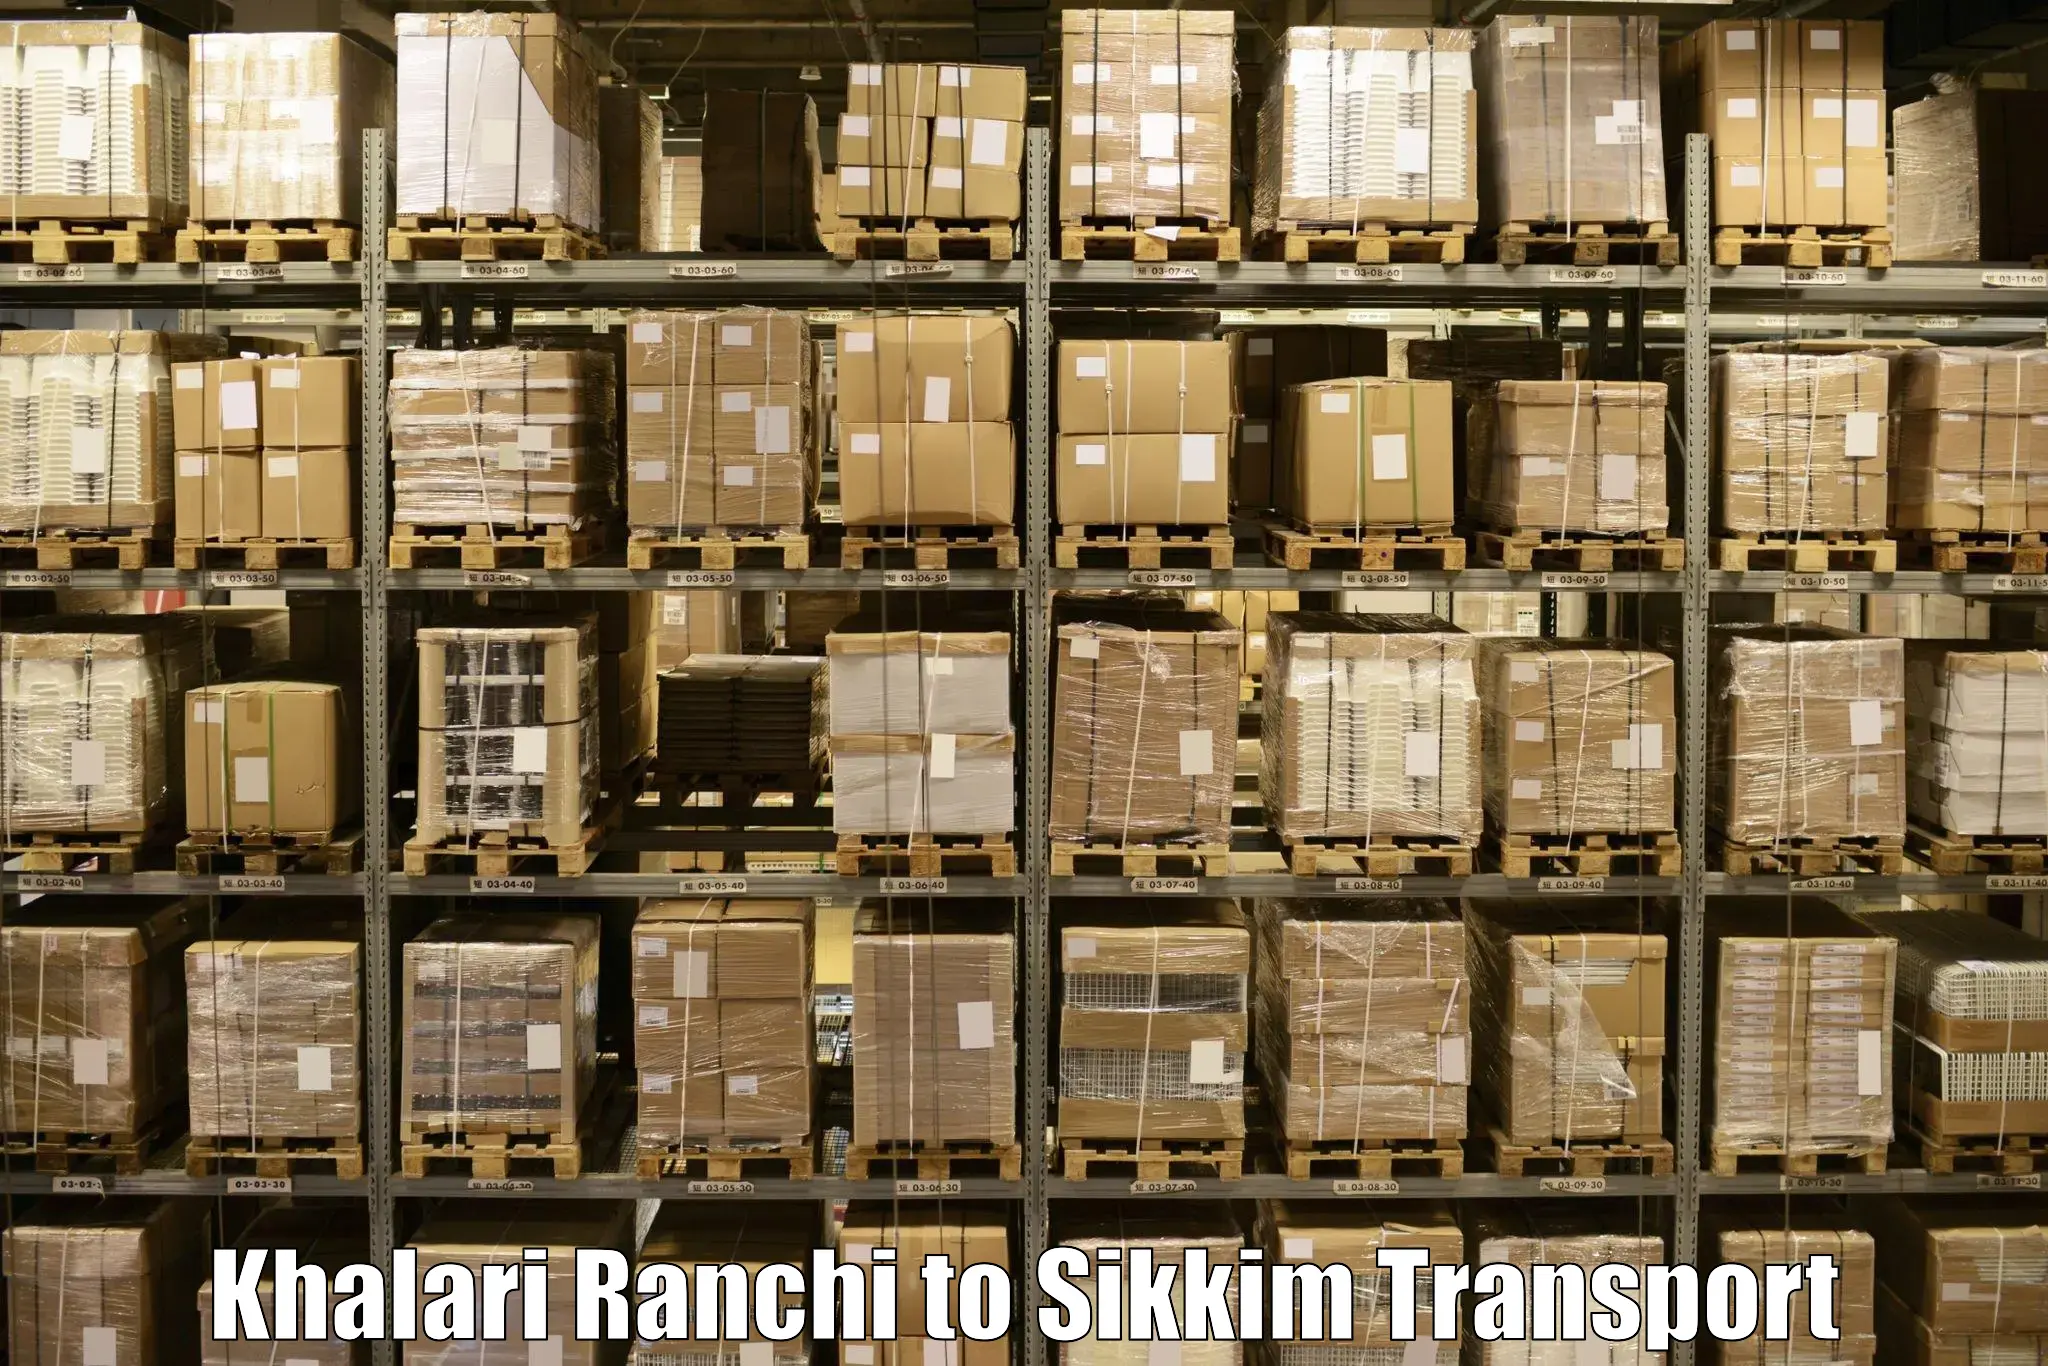 Container transport service Khalari Ranchi to Geyzing